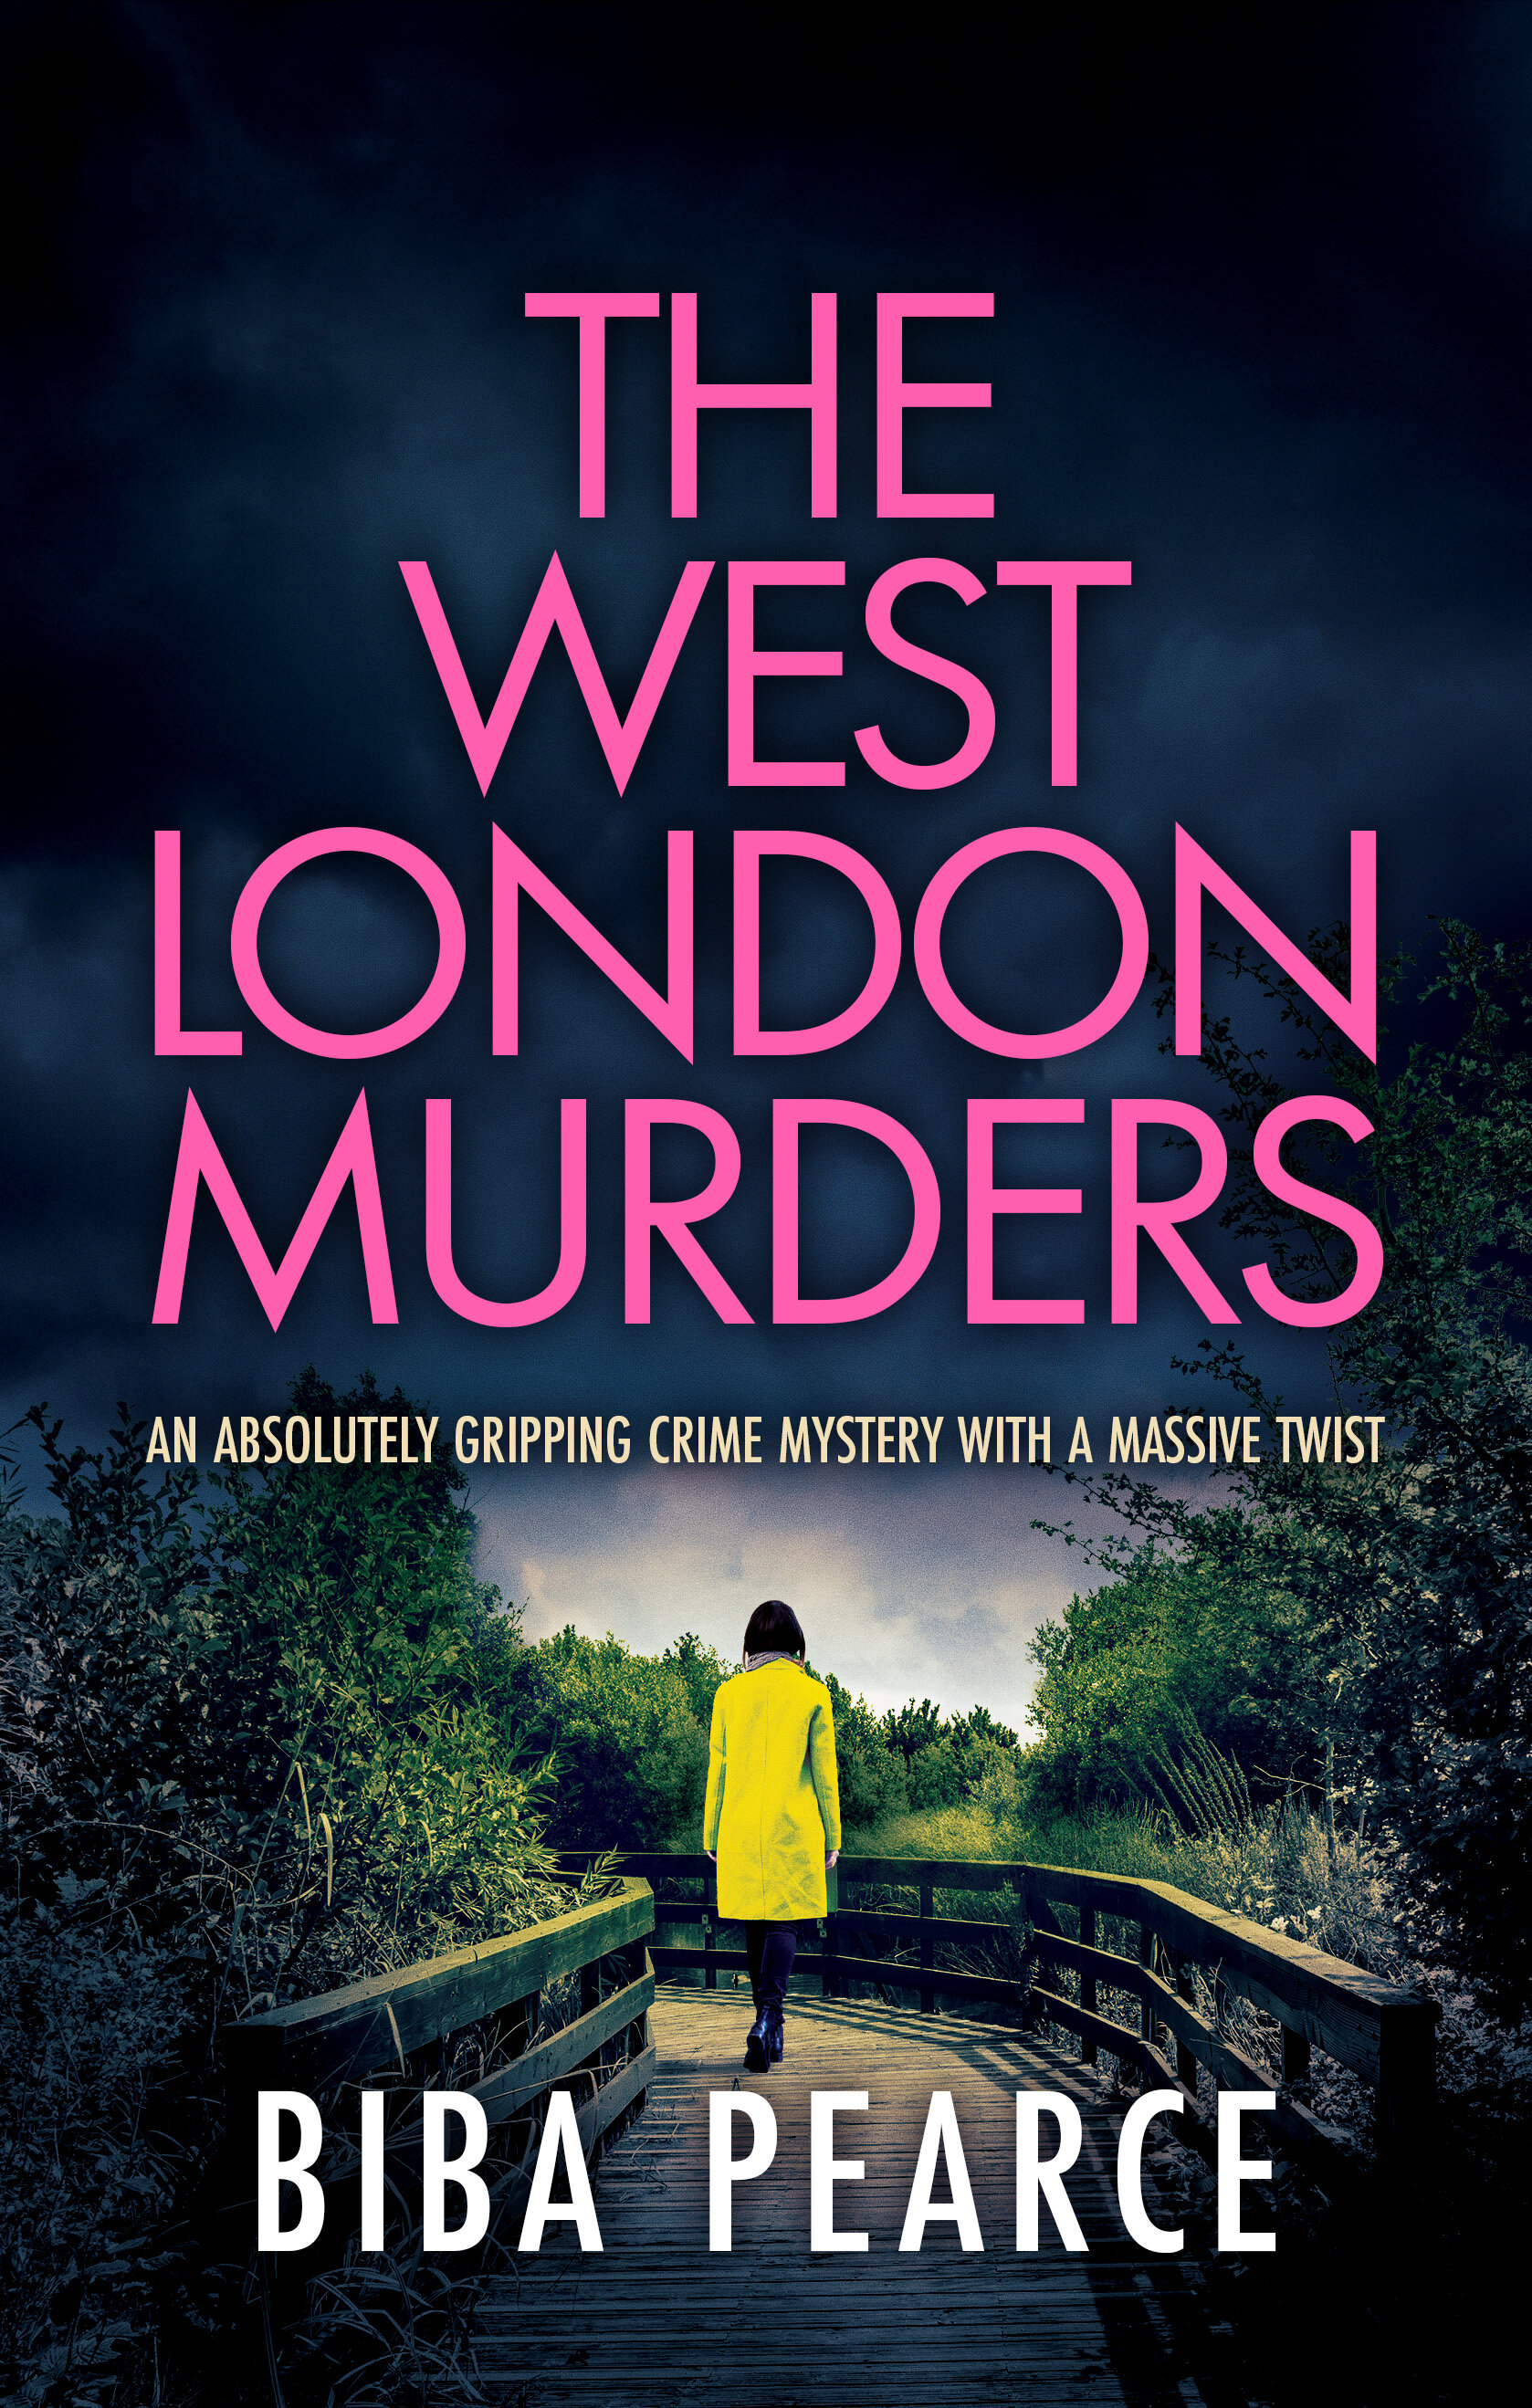 THE WEST LONDON MURDERS Publish.jpg